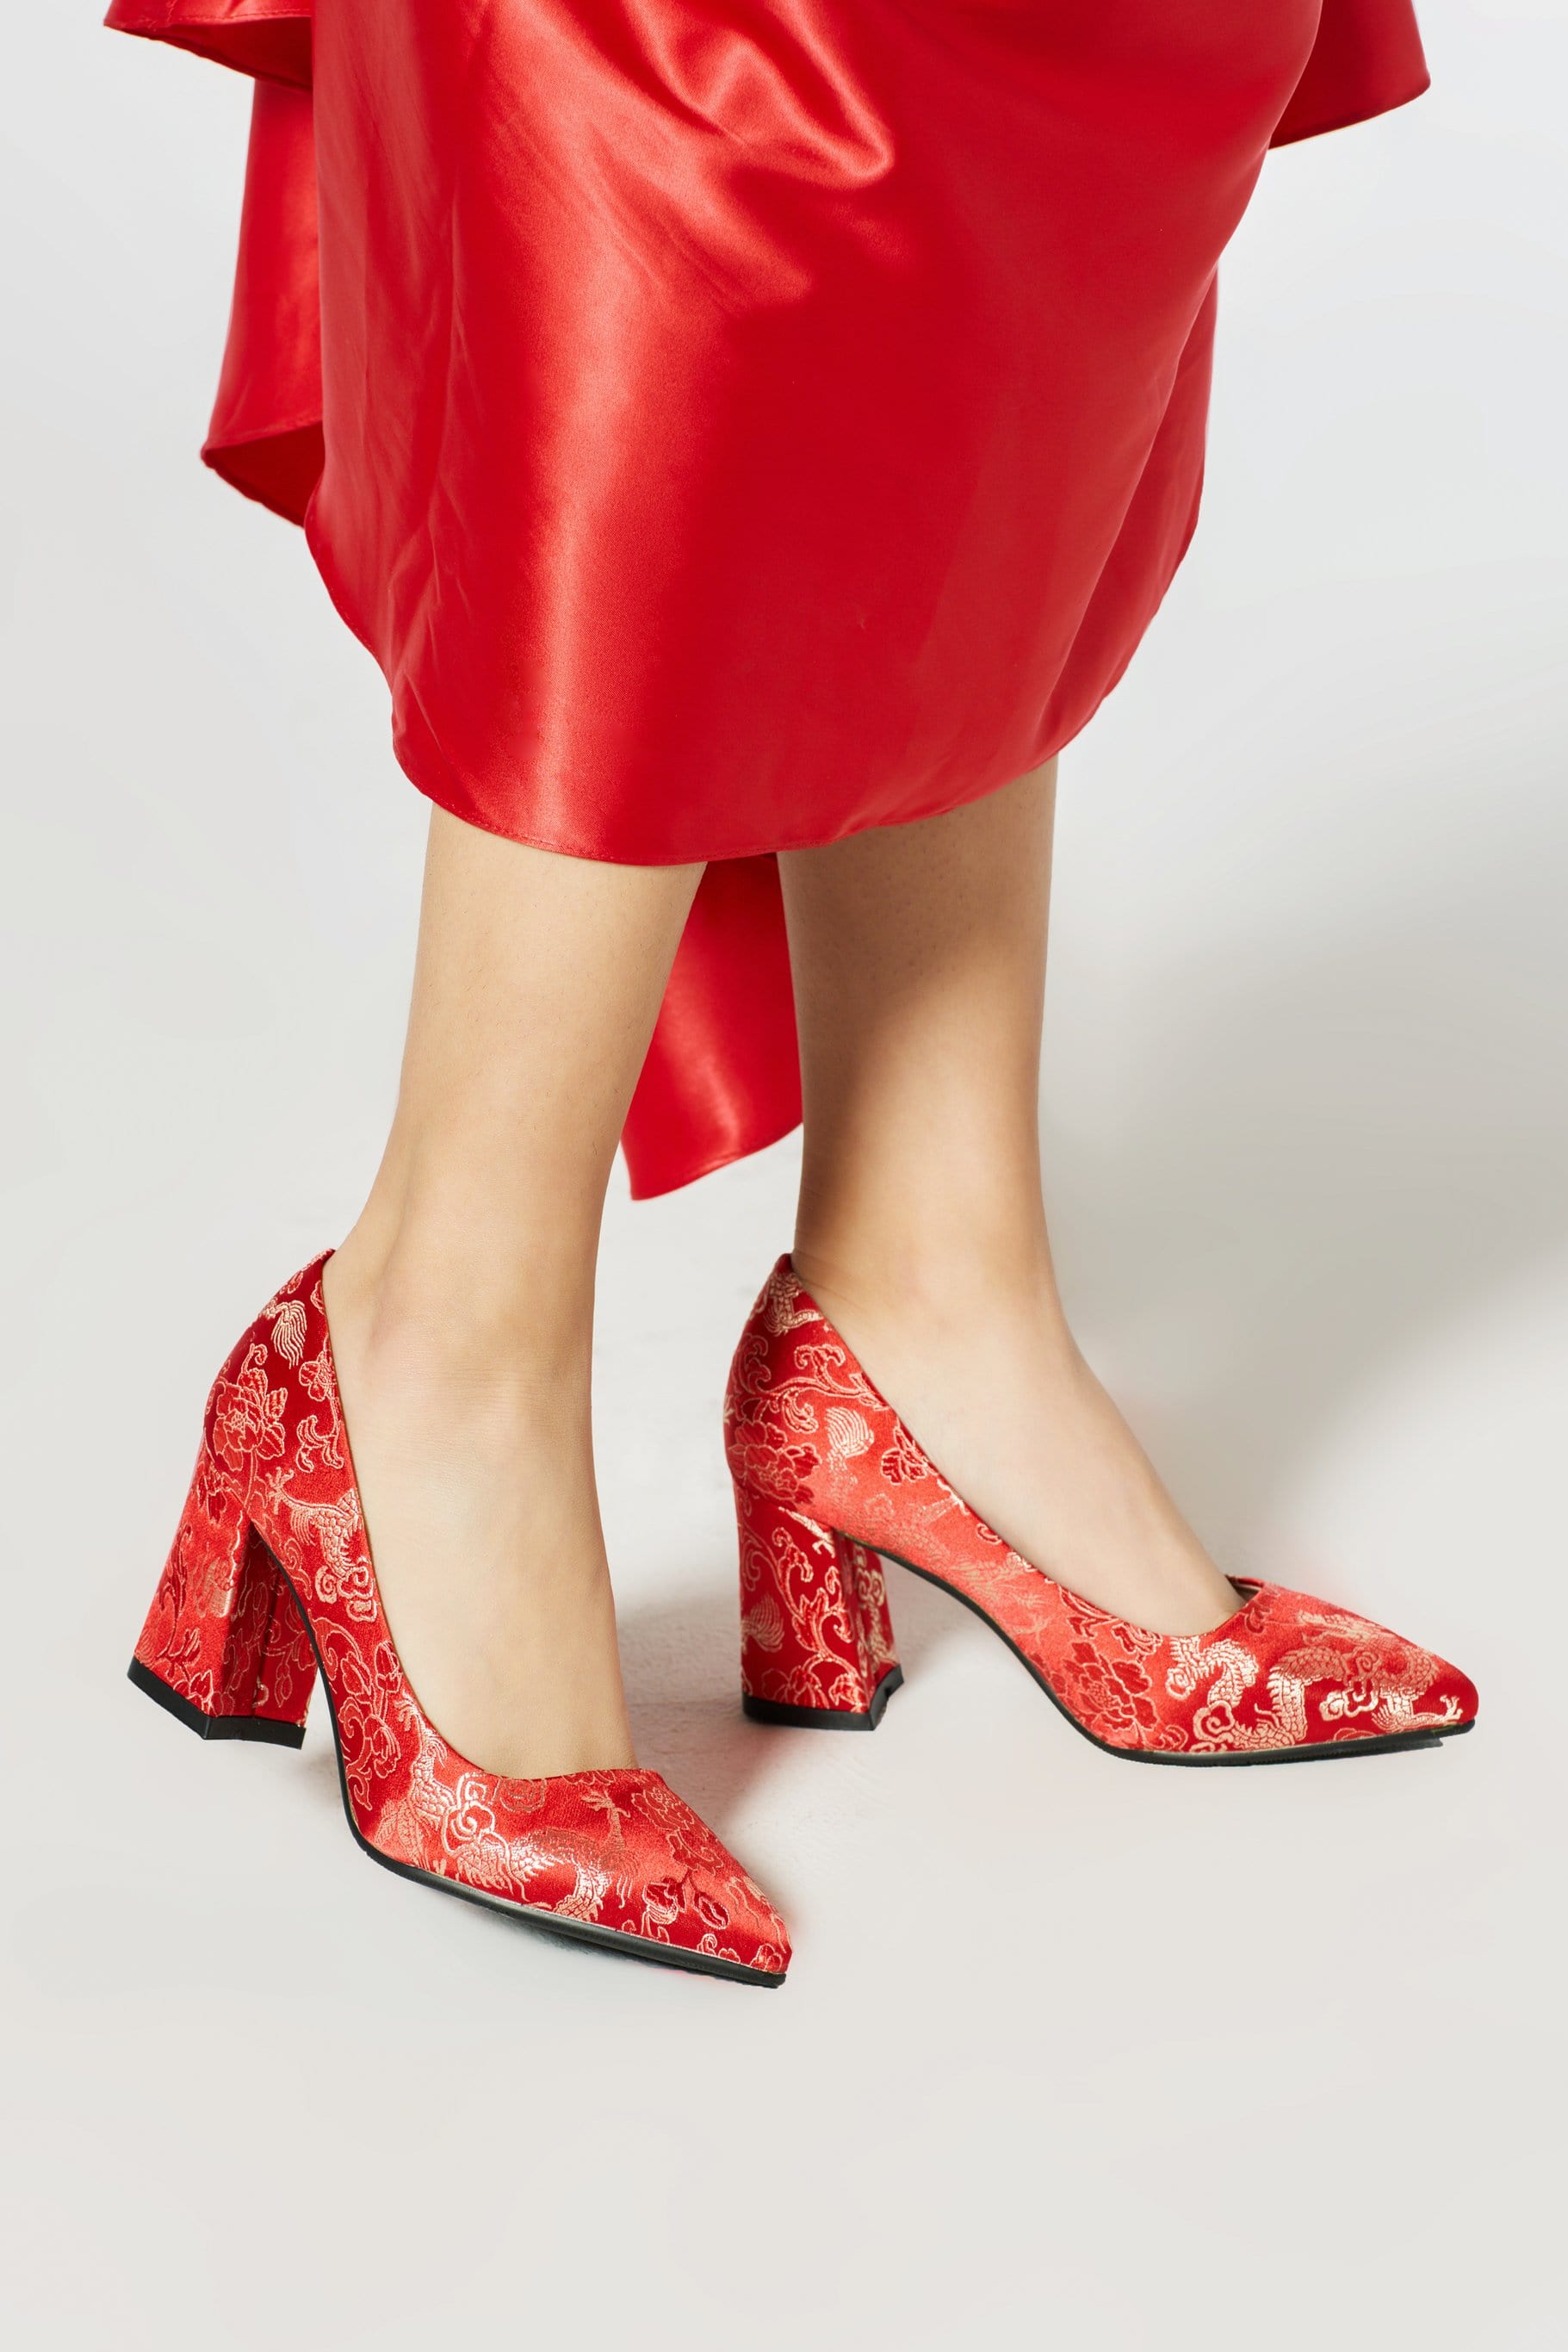 Hogl Patent Red Mid Heel Court Shoes - Cassielle Shoe & Clothing Boutique